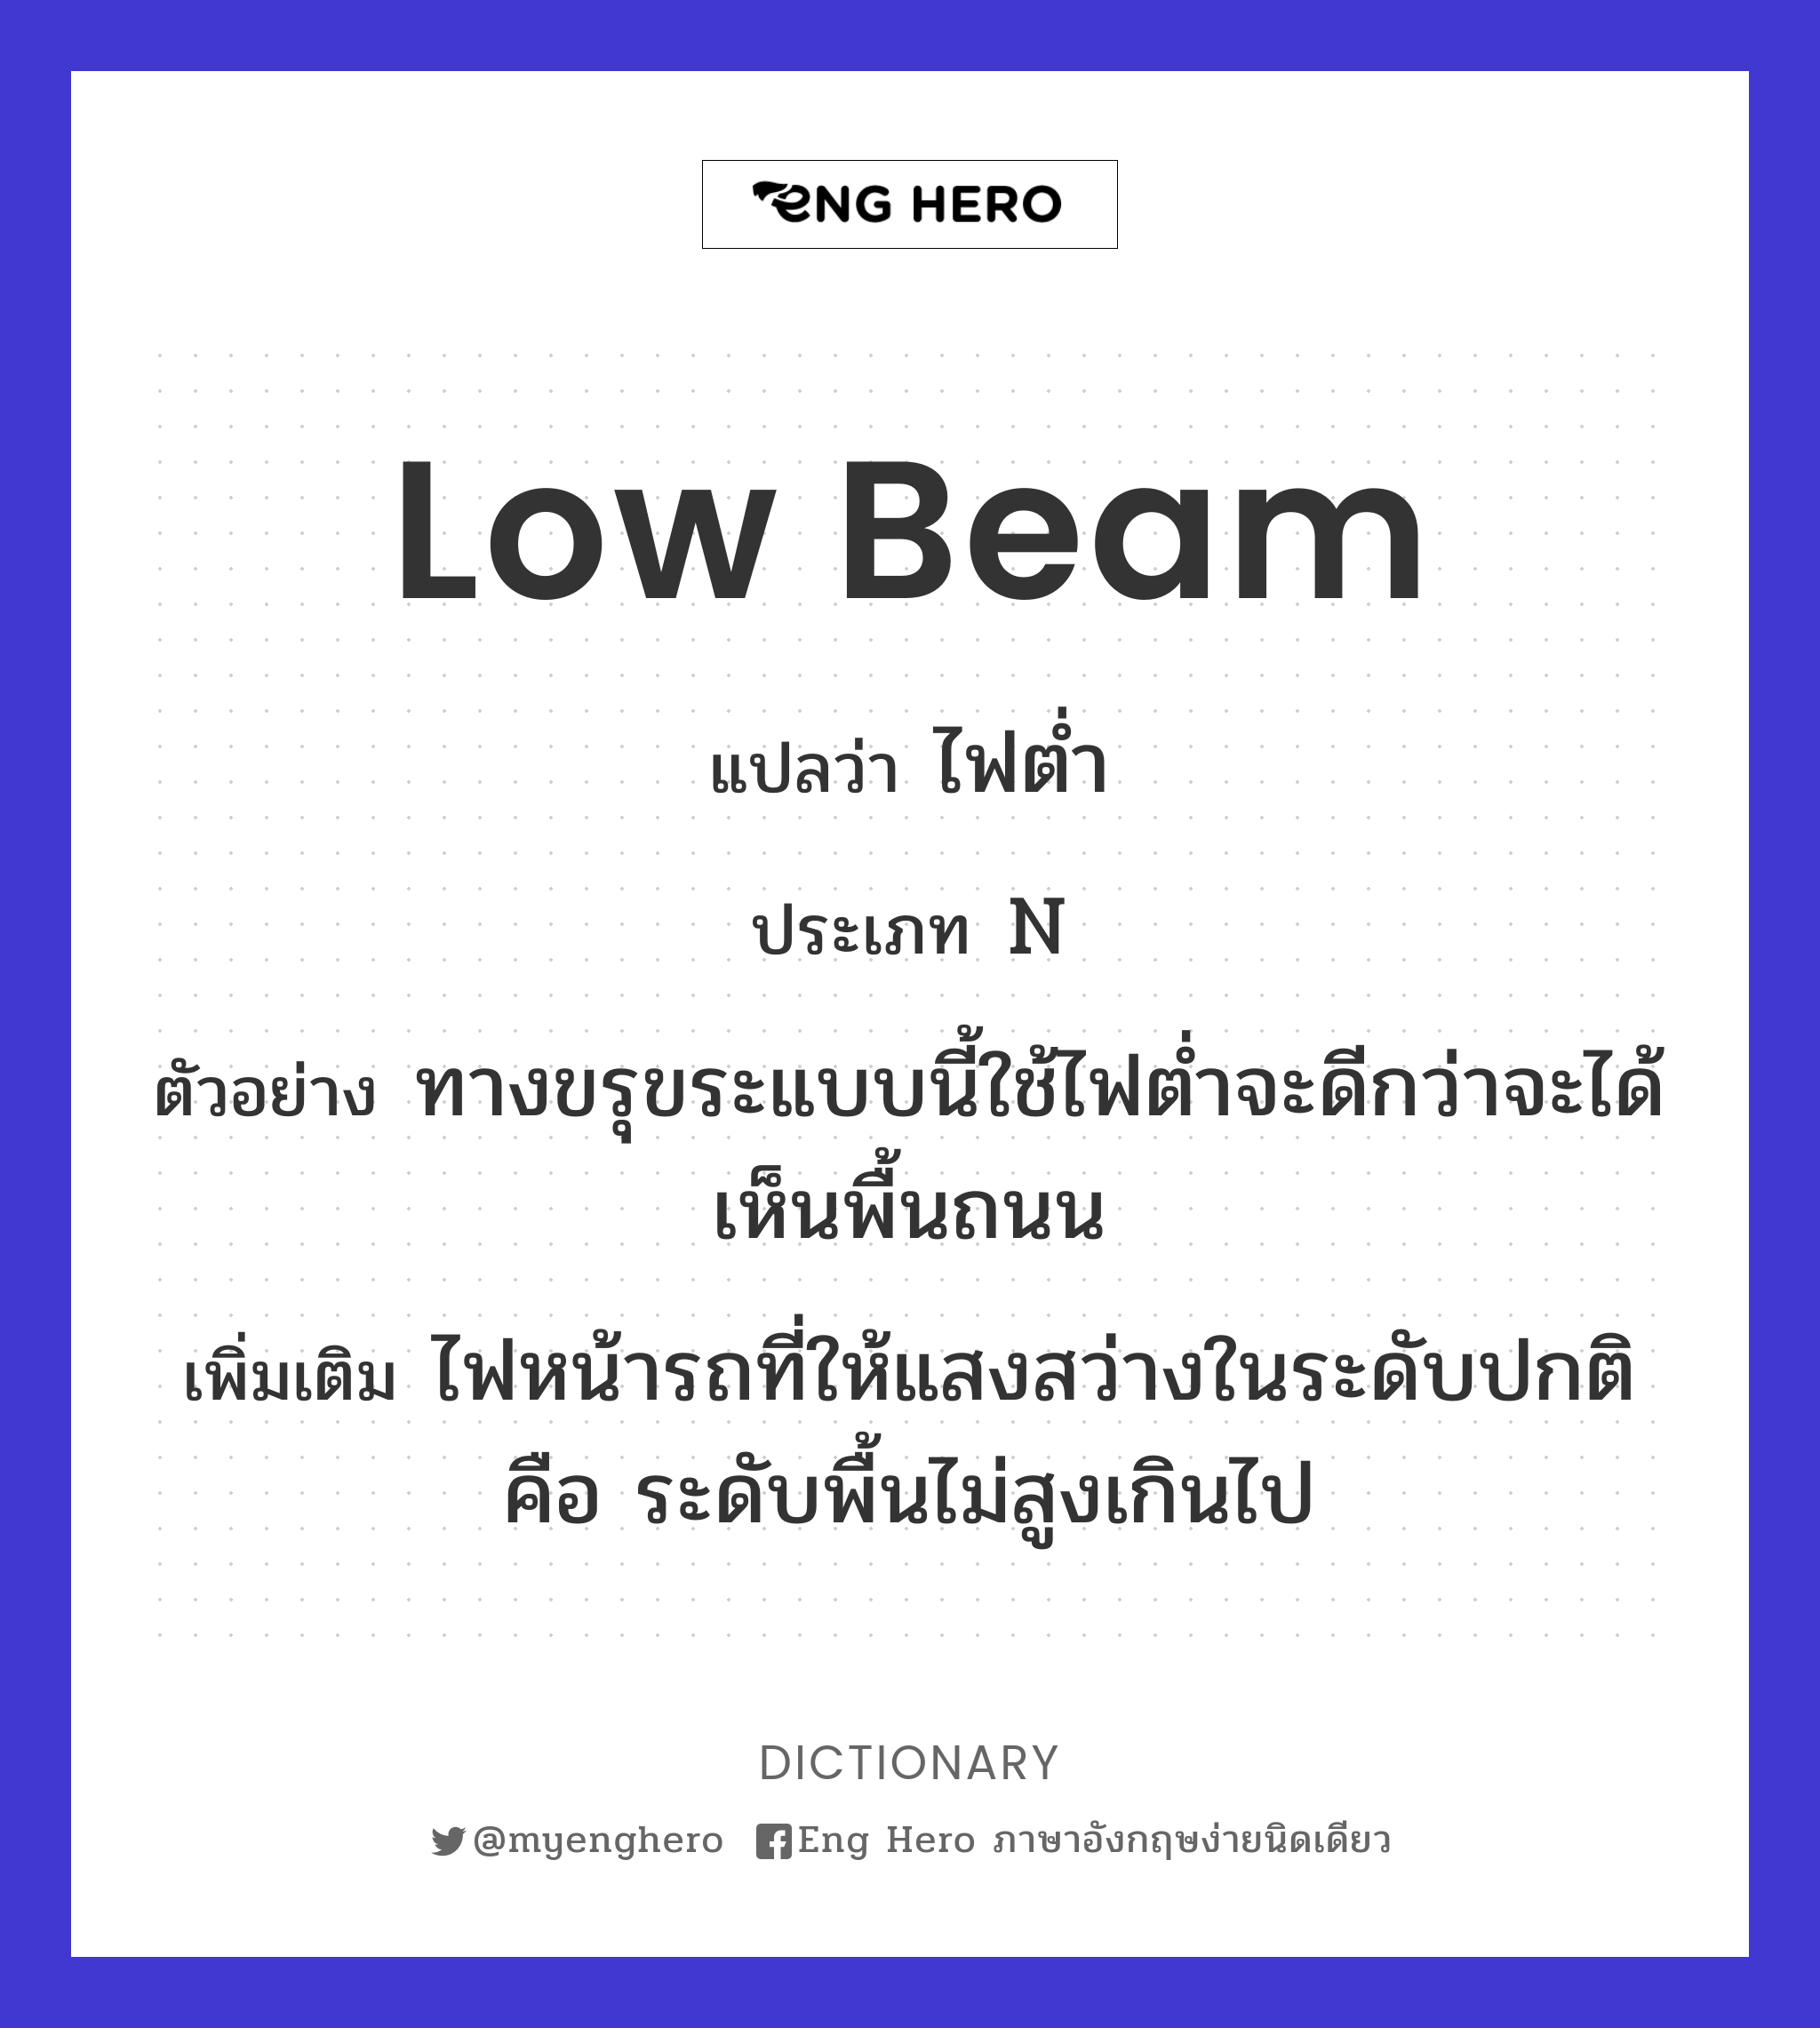 low beam